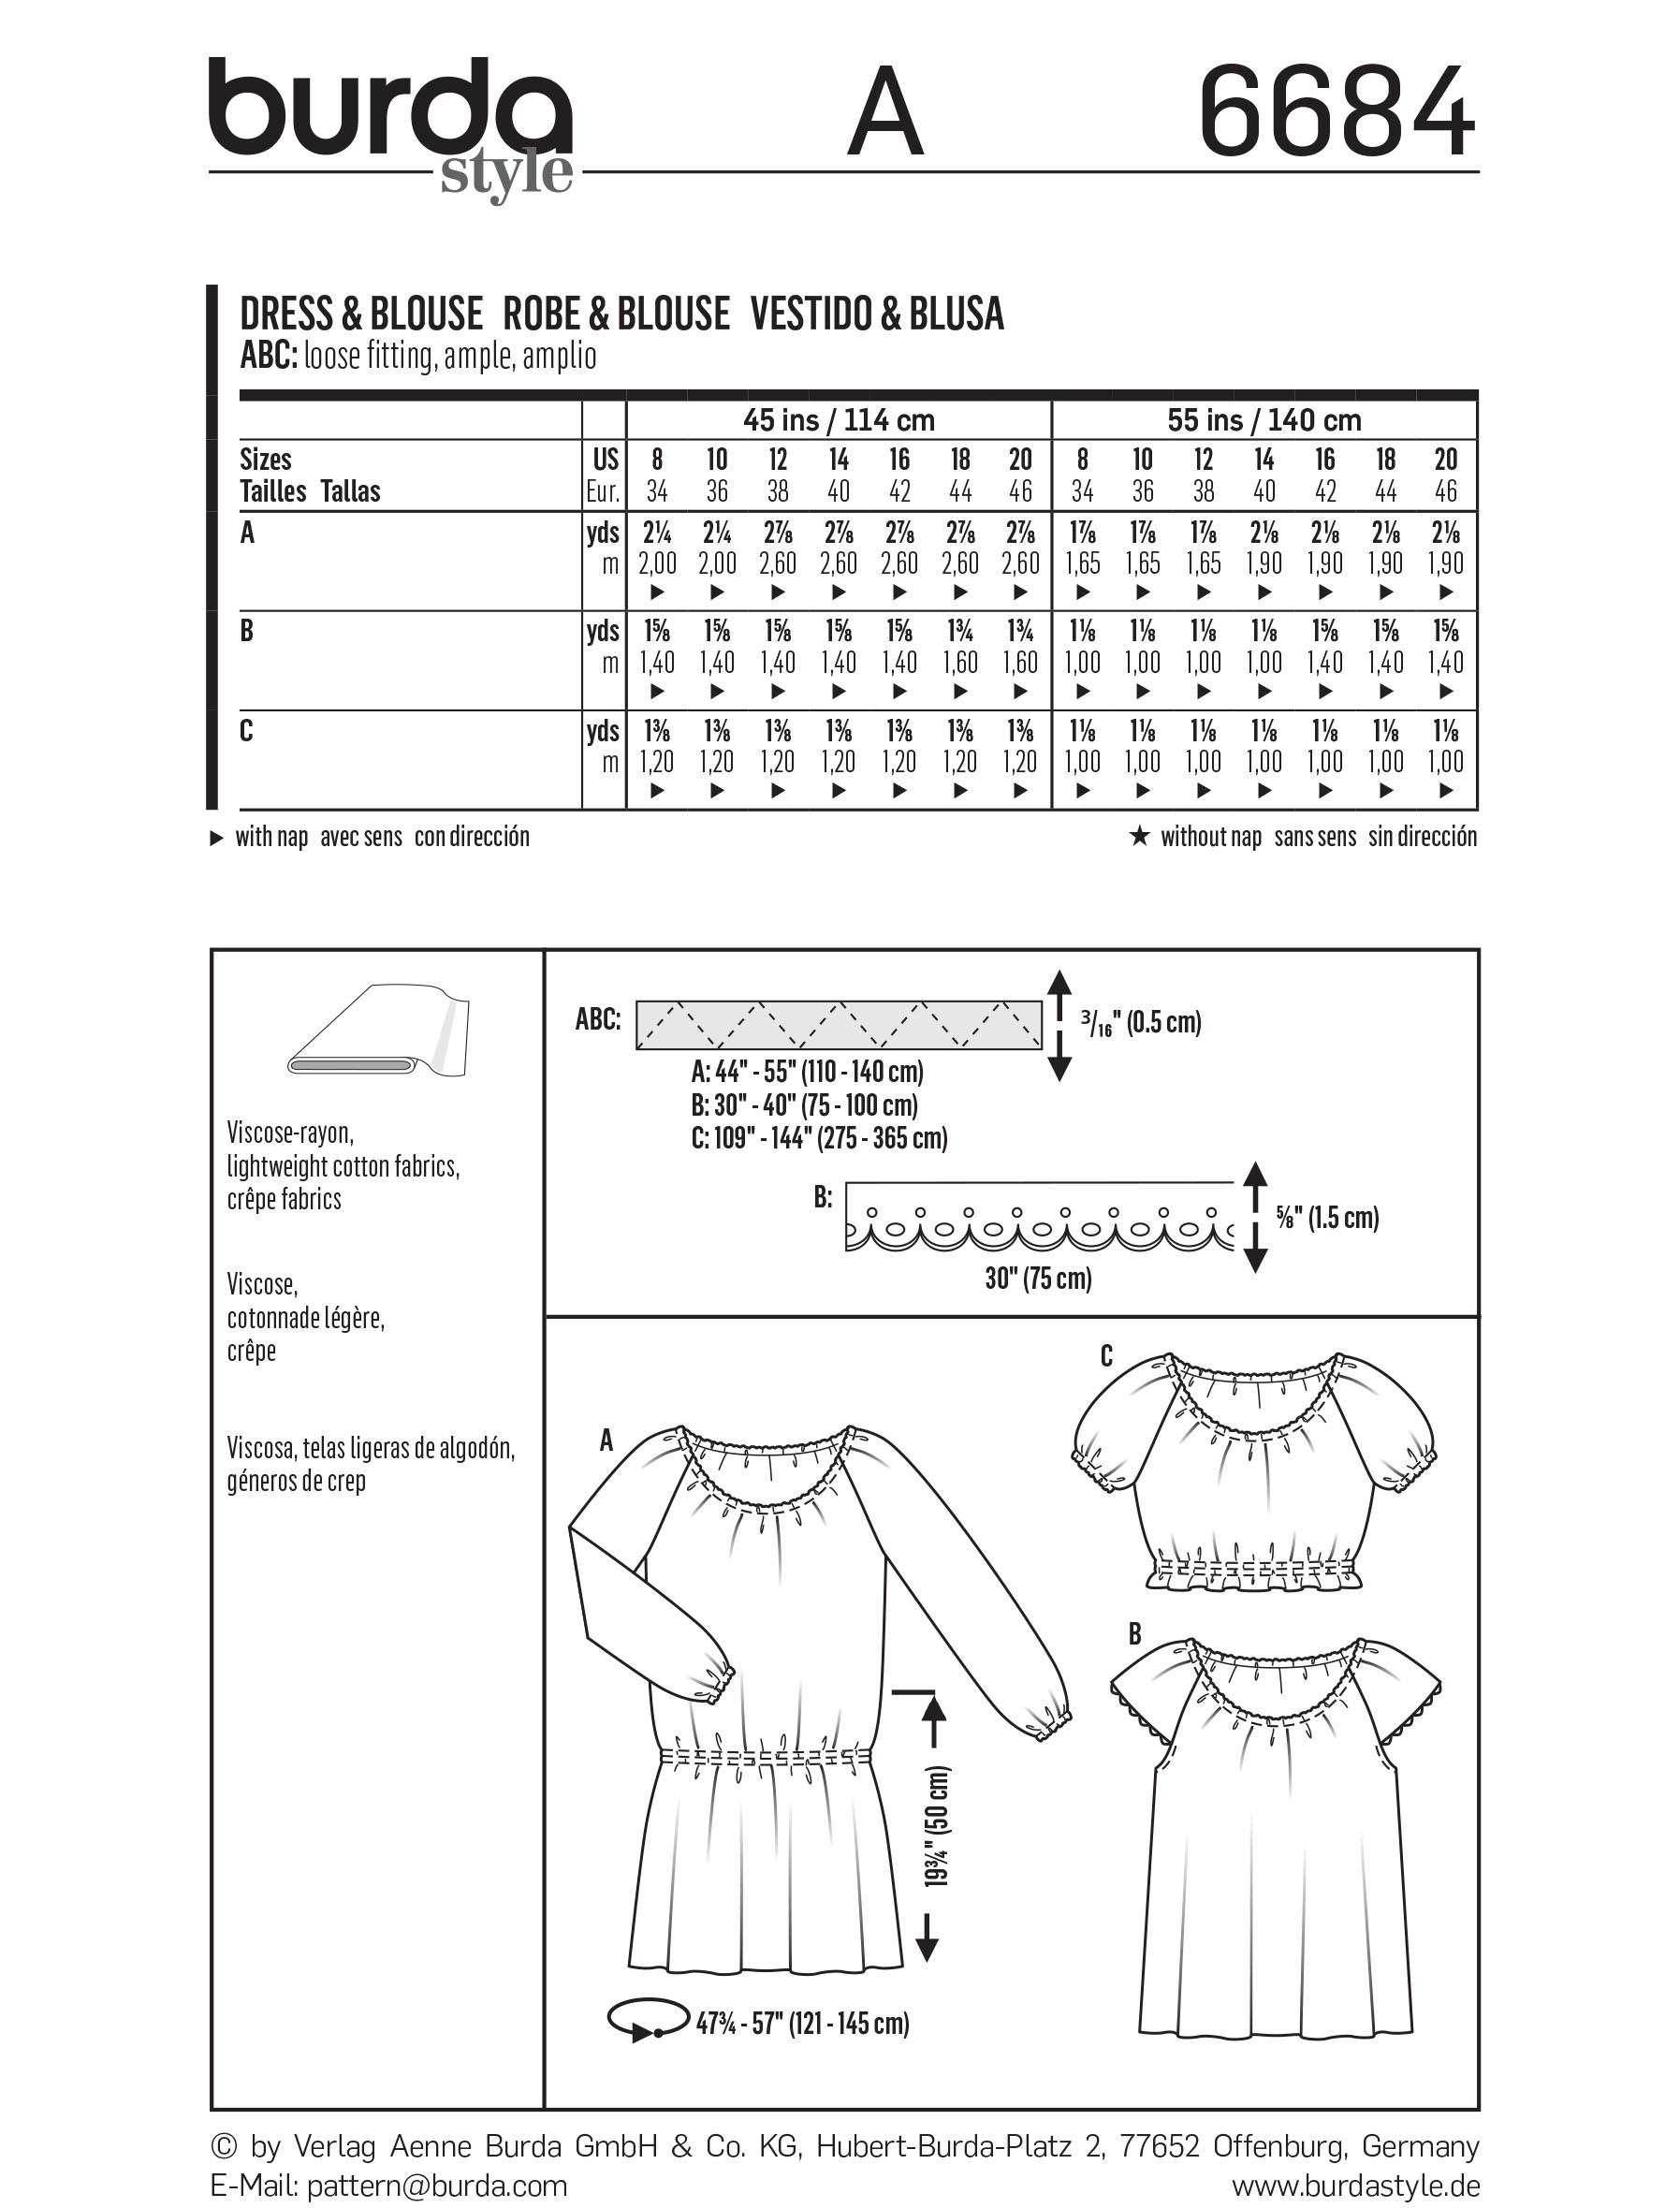 Burda B6684 Women's Dress & Blouse Sewing Pattern